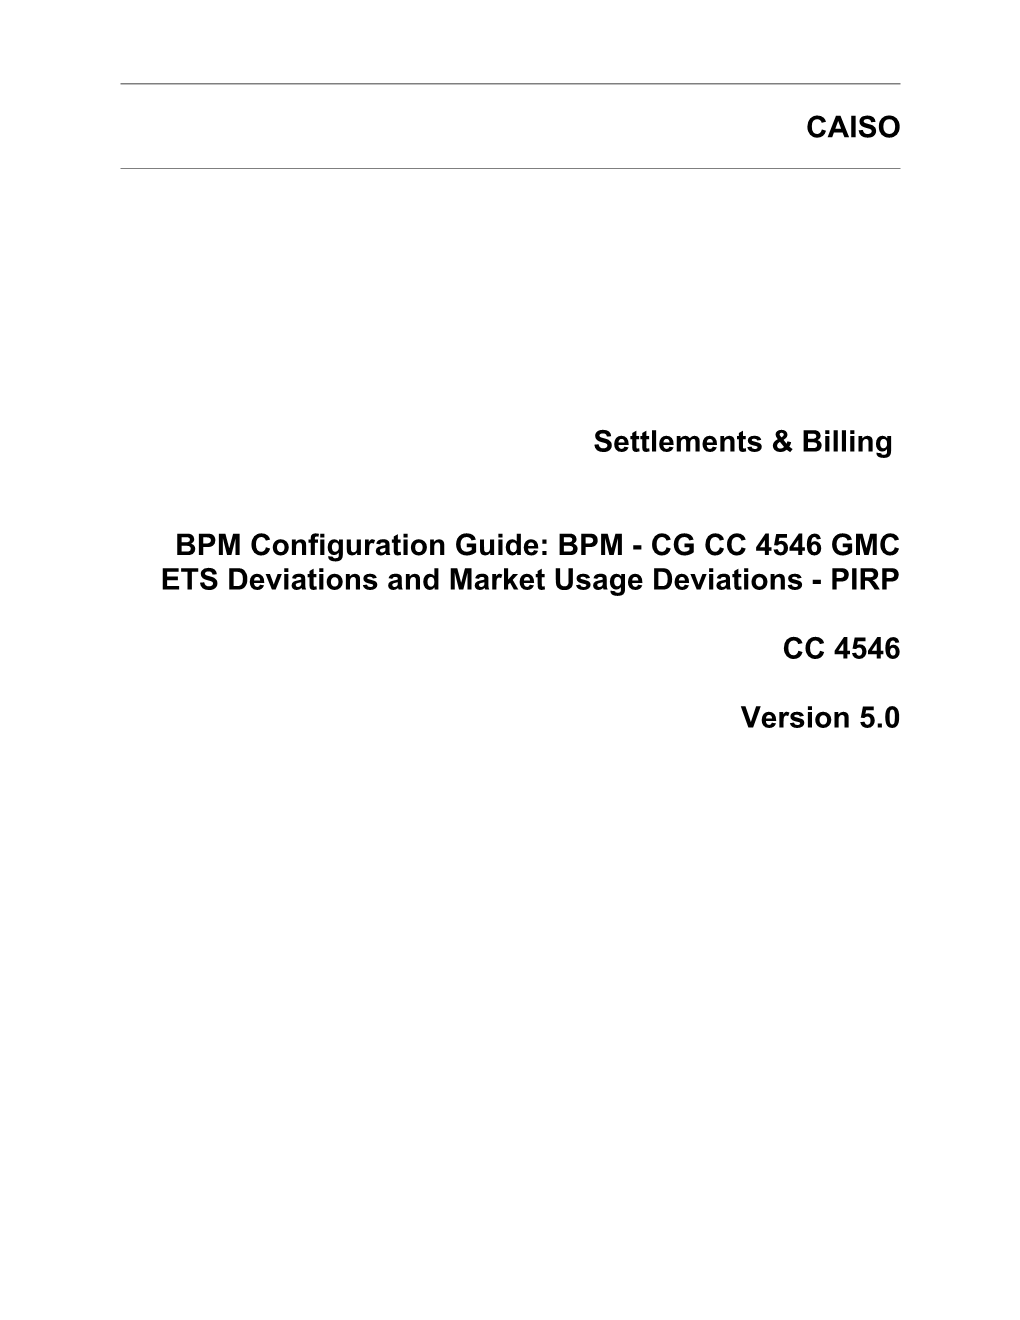 BPM - CG CC 4546 GMC ETS Deviations and Market Usage Deviations - PIRP